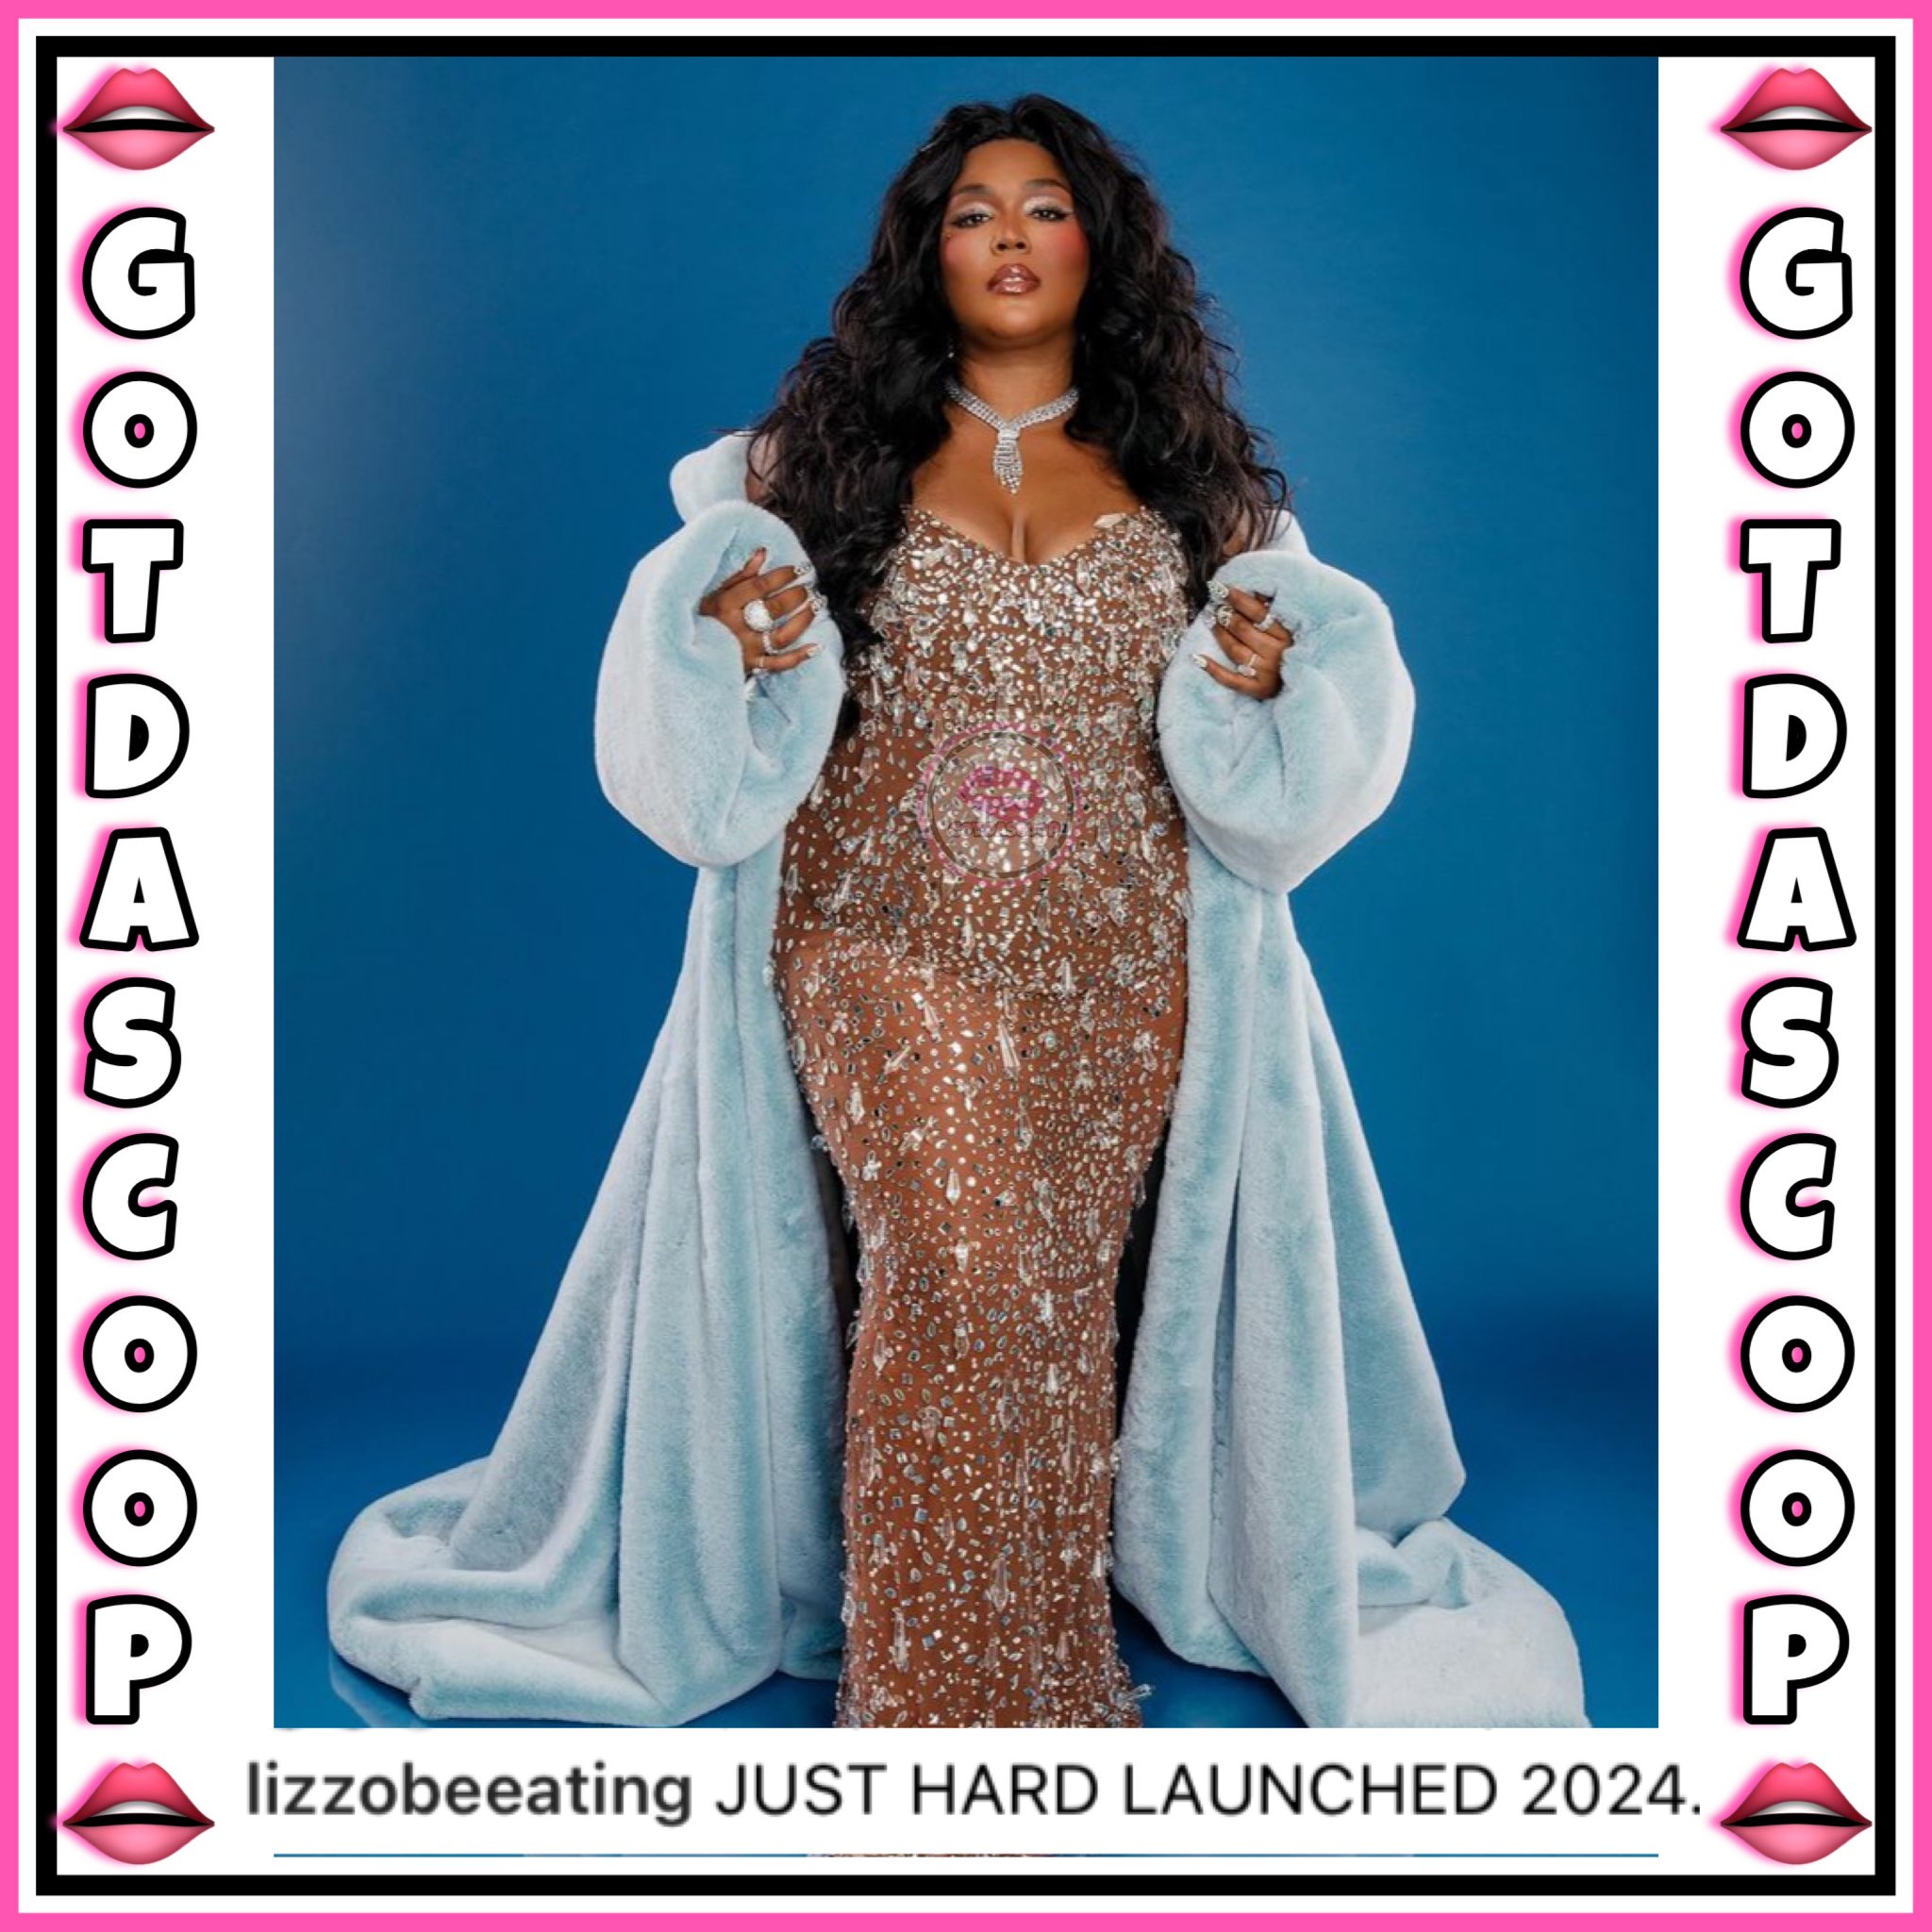 ✨GOT DA SCOOP✨ on X: Lizzo hard launching that new 2024 body